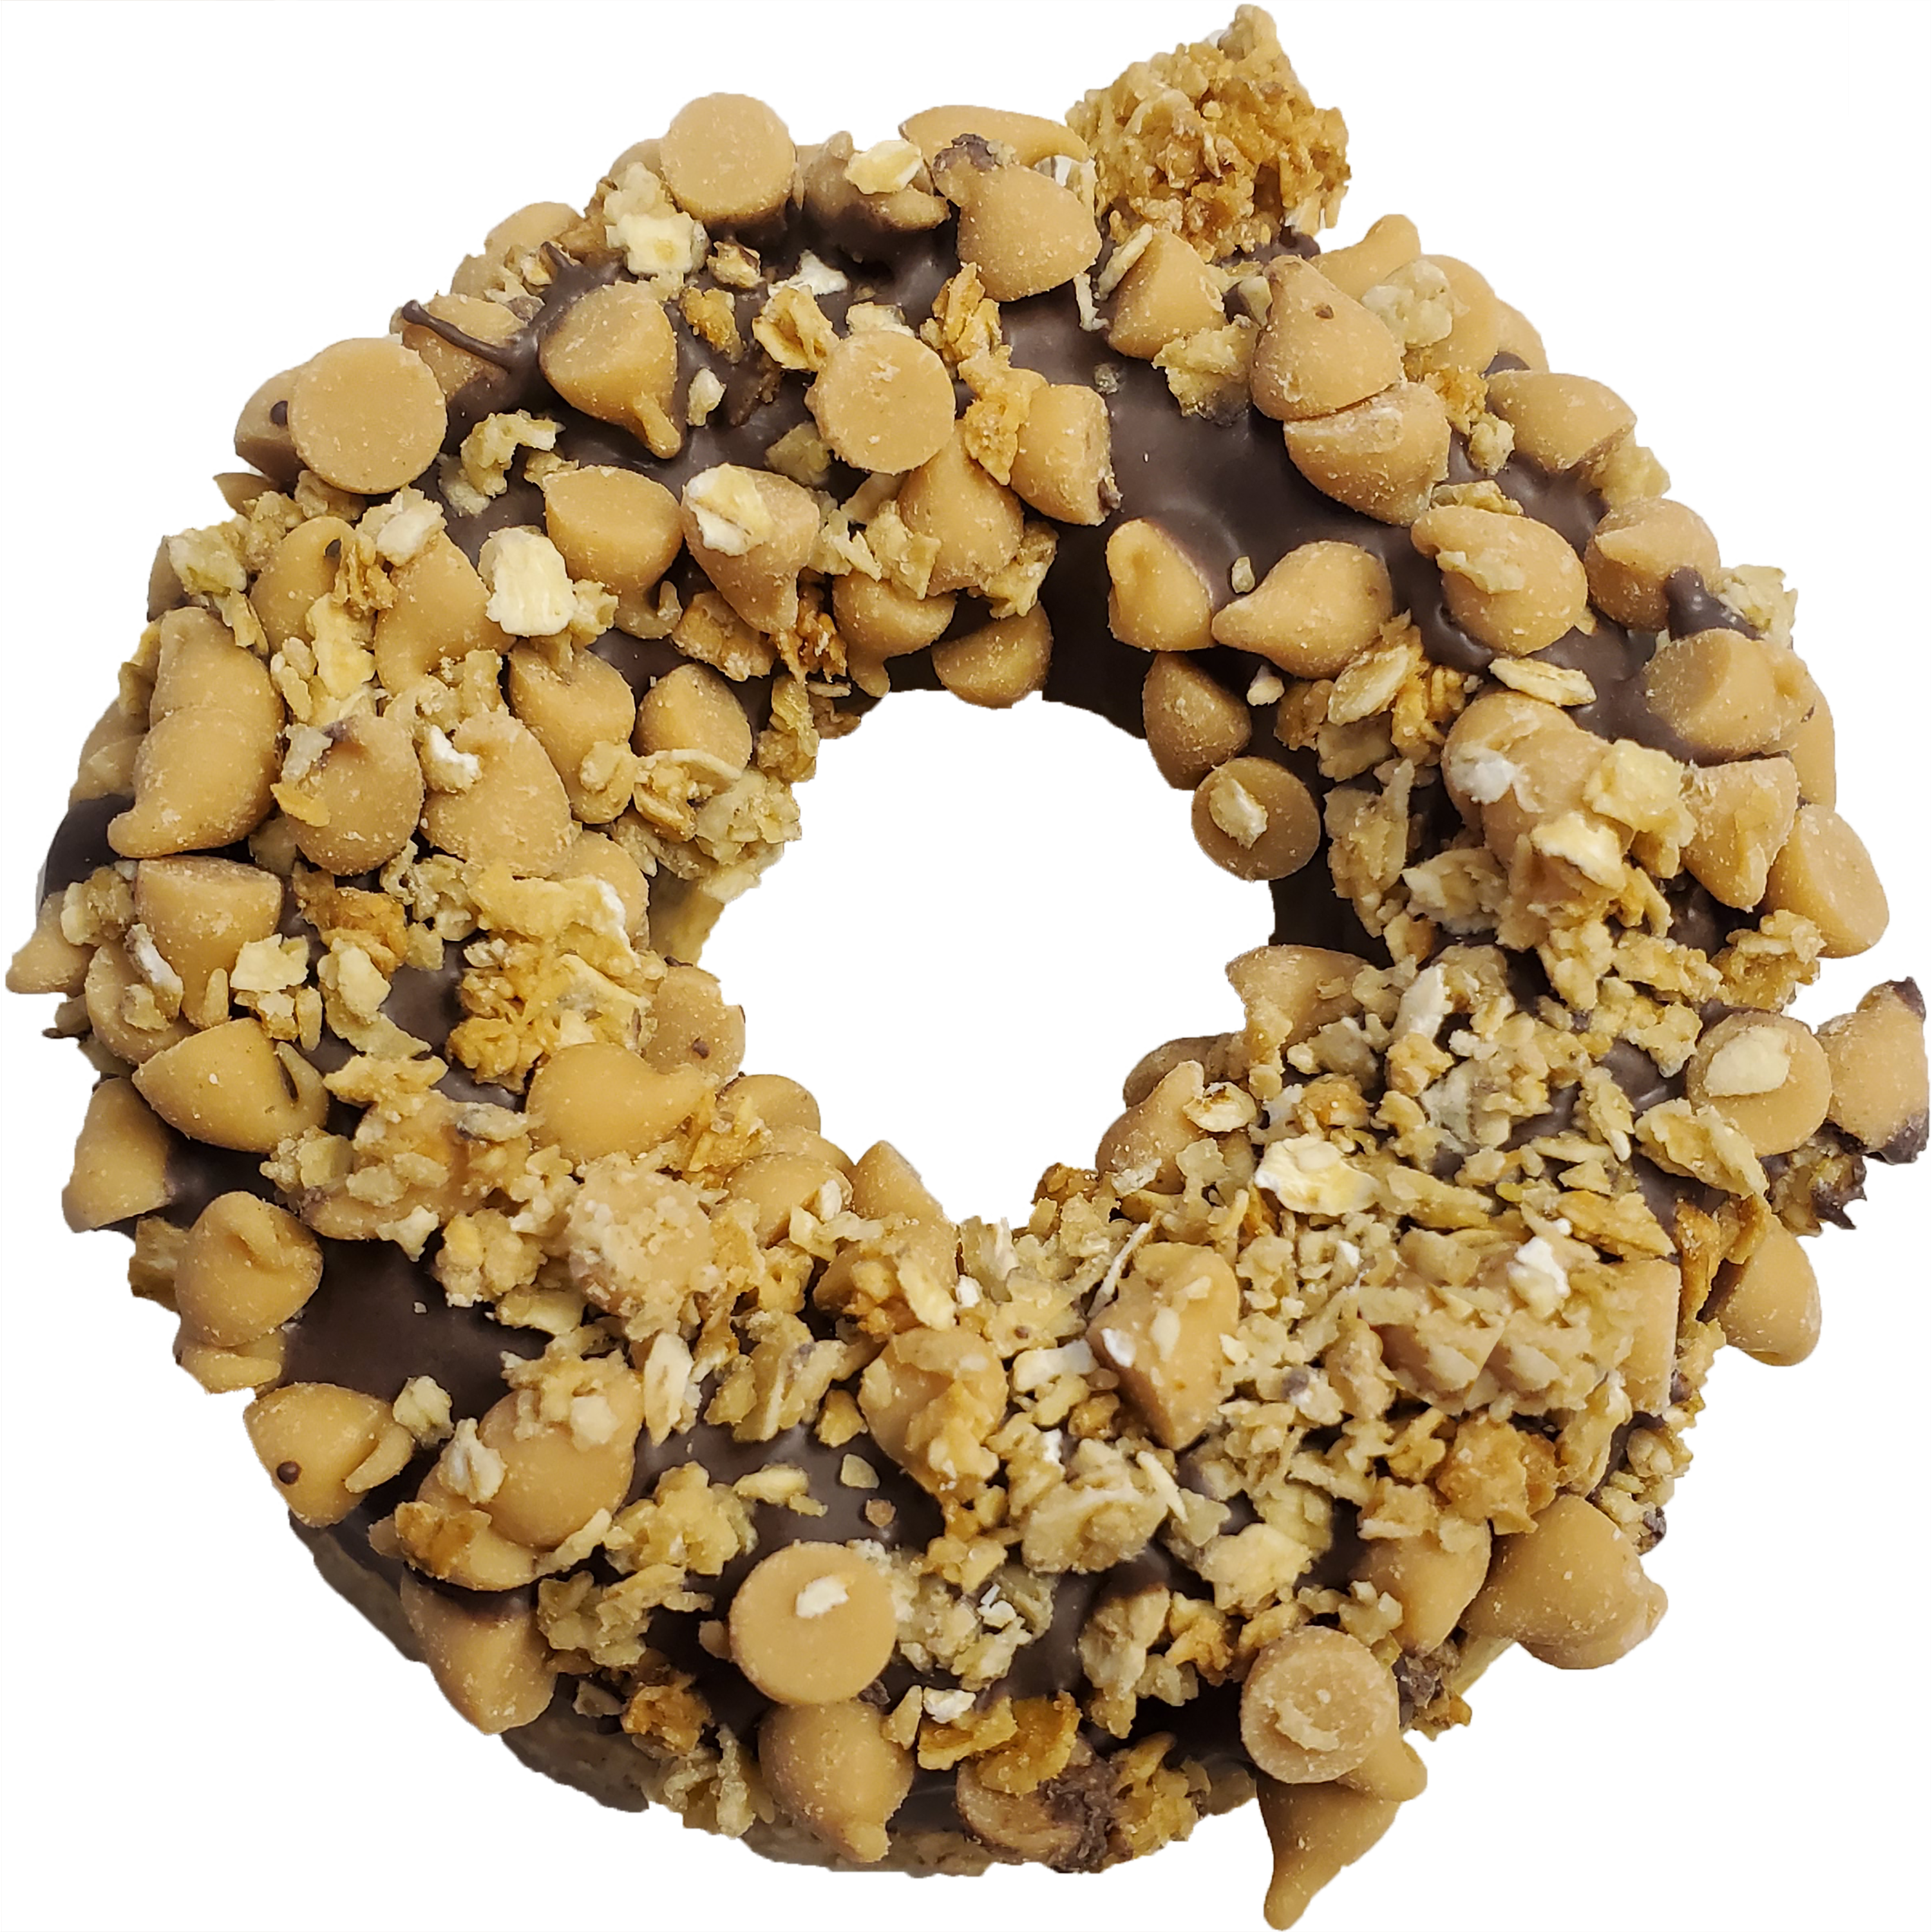 K9 Granola Factory Donut Shop Gourmet Donut For Dogs, Carob Peanut Butter Crunch